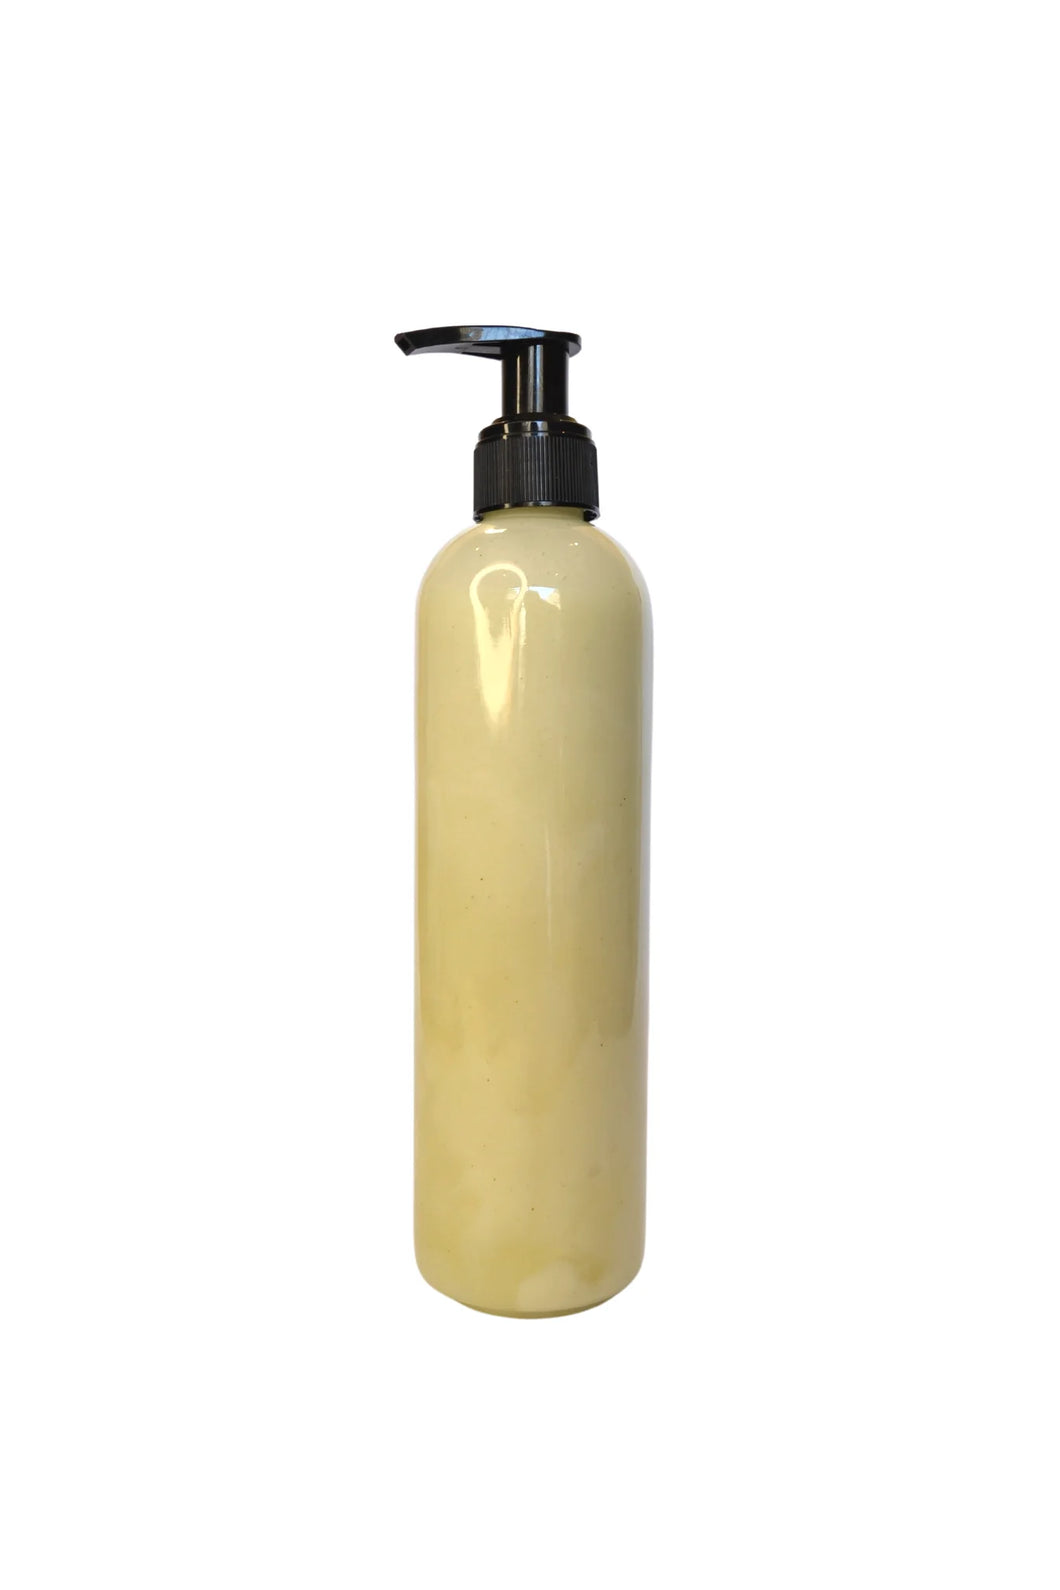 Moringa and lemongrass shower gel / body wash for glowing skin / anti aging